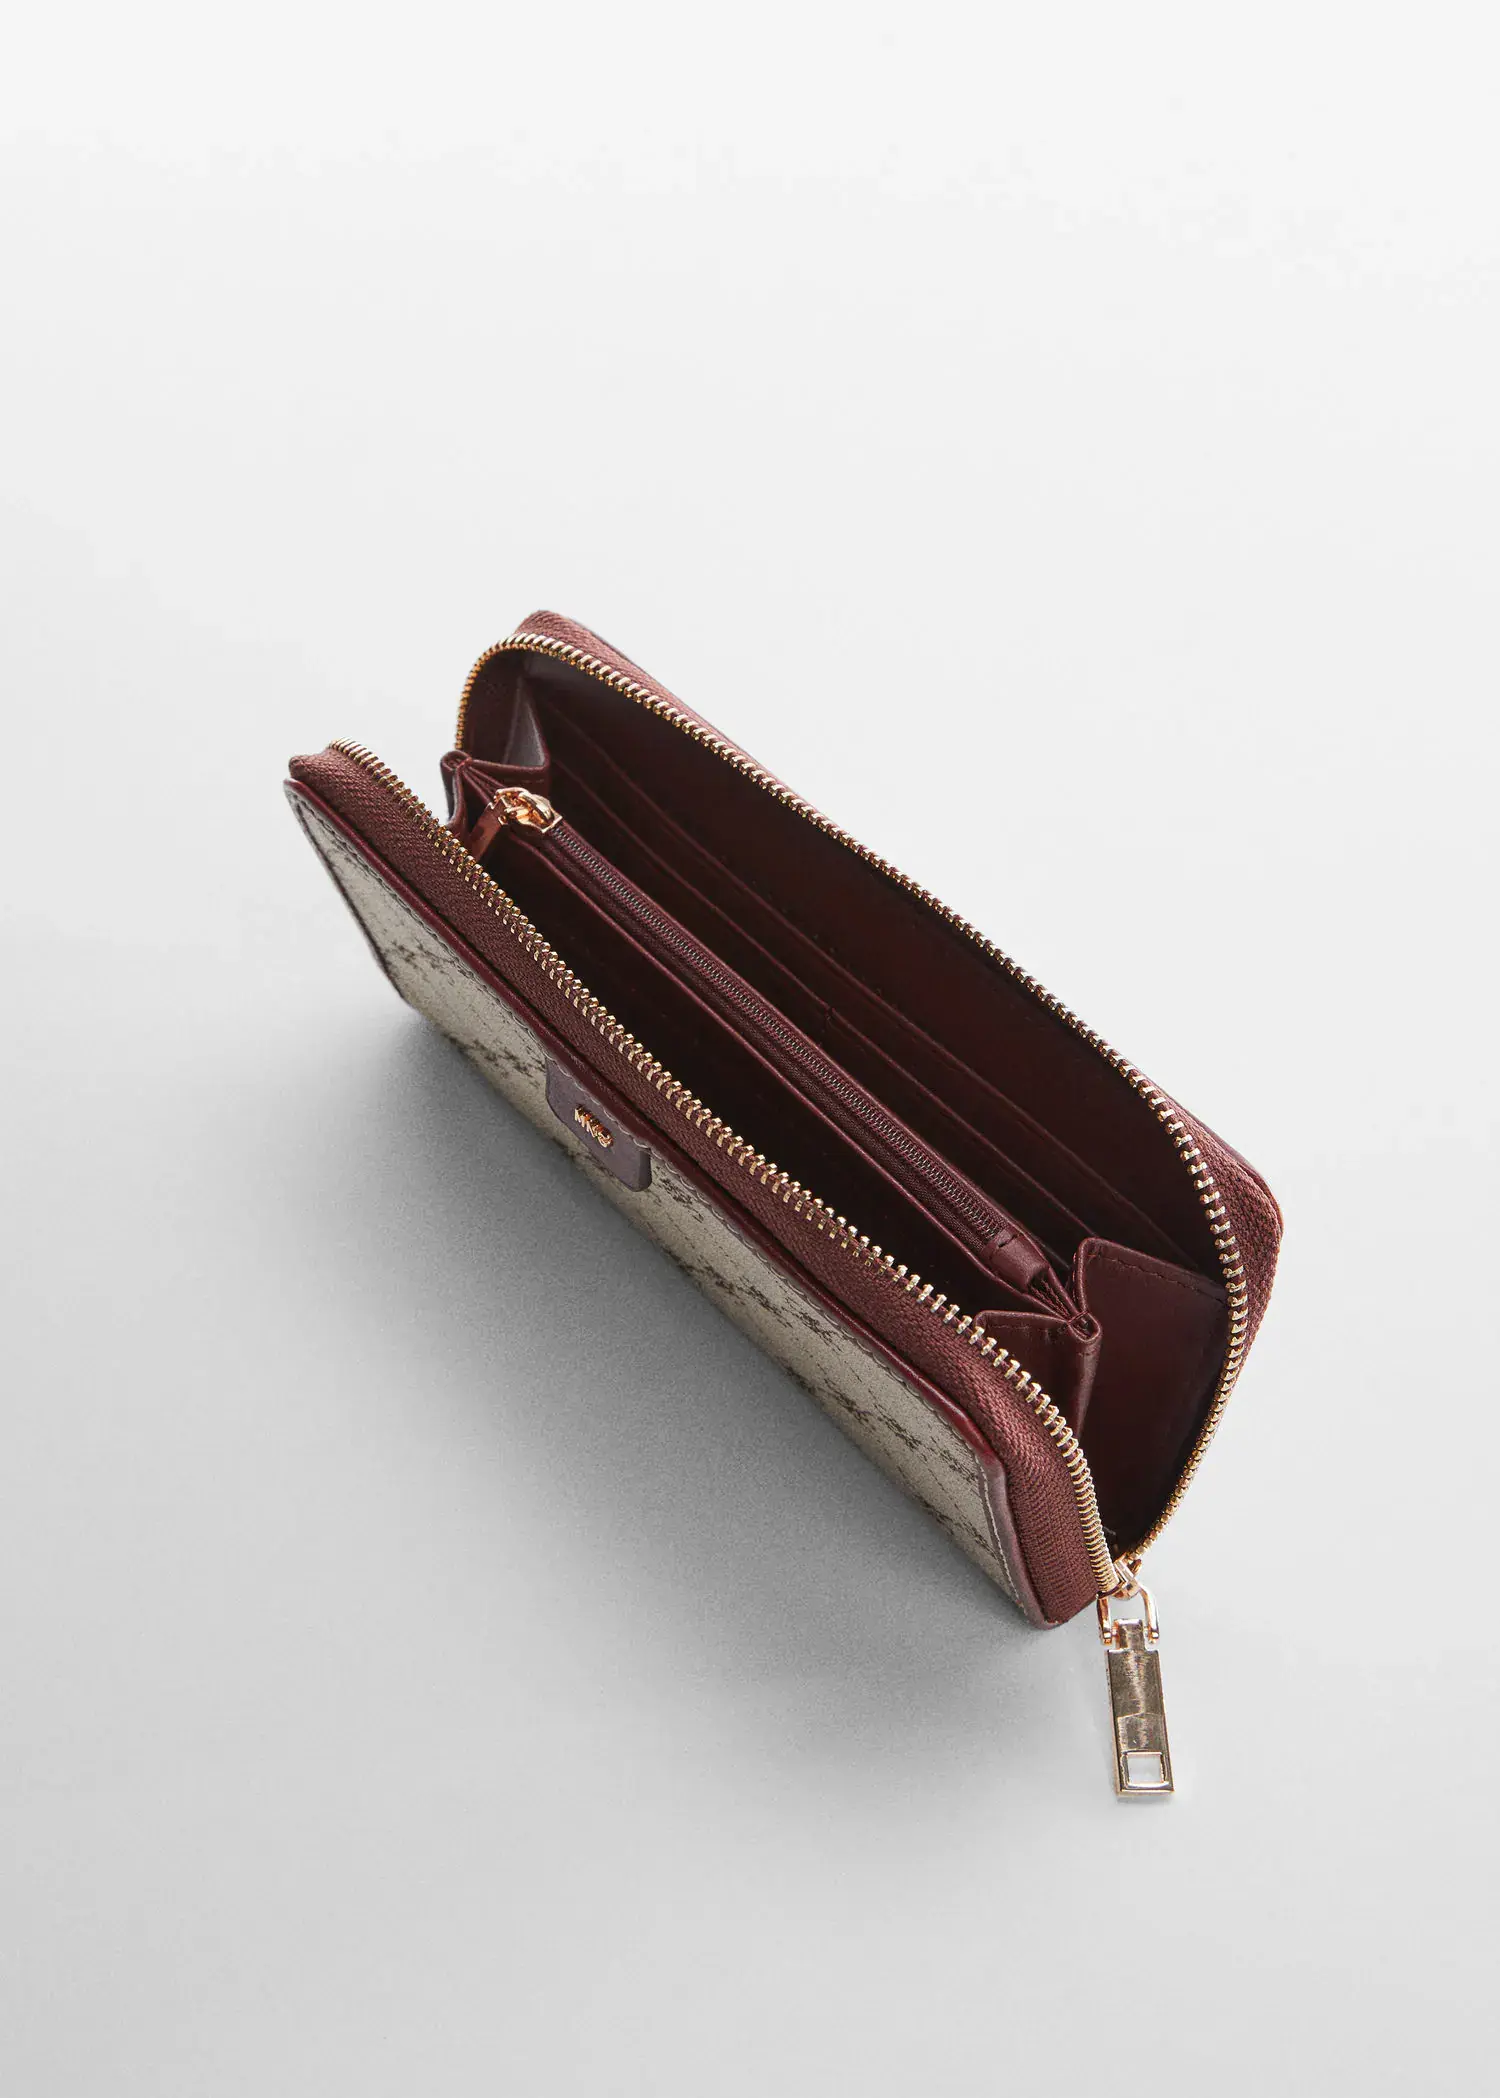 Mango Jacquard wallet. 2